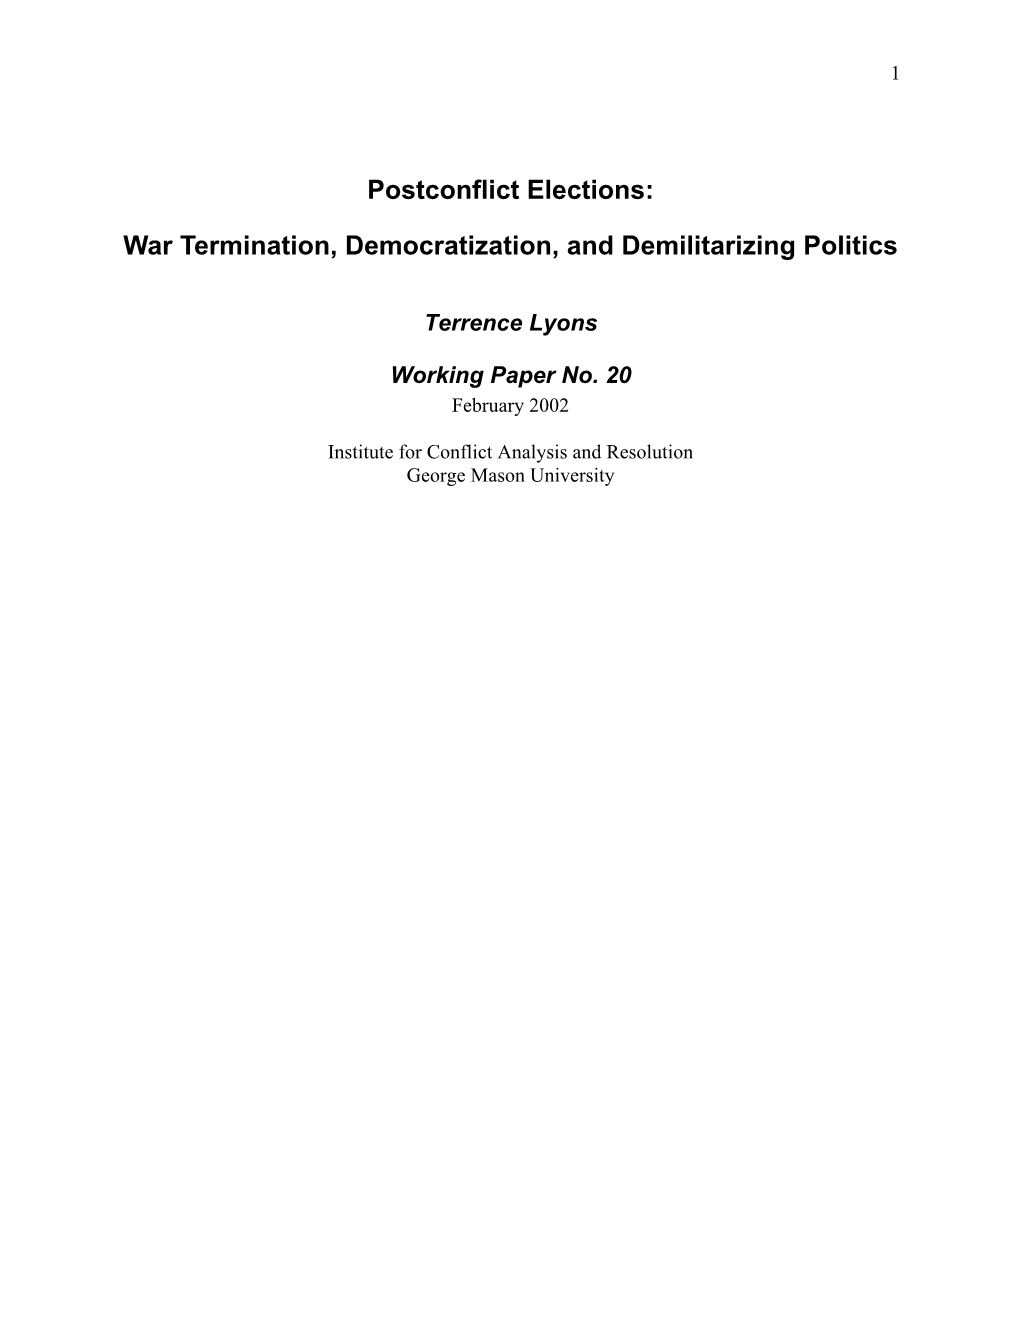 Postconflict Elections: War Termination, Democratization, And